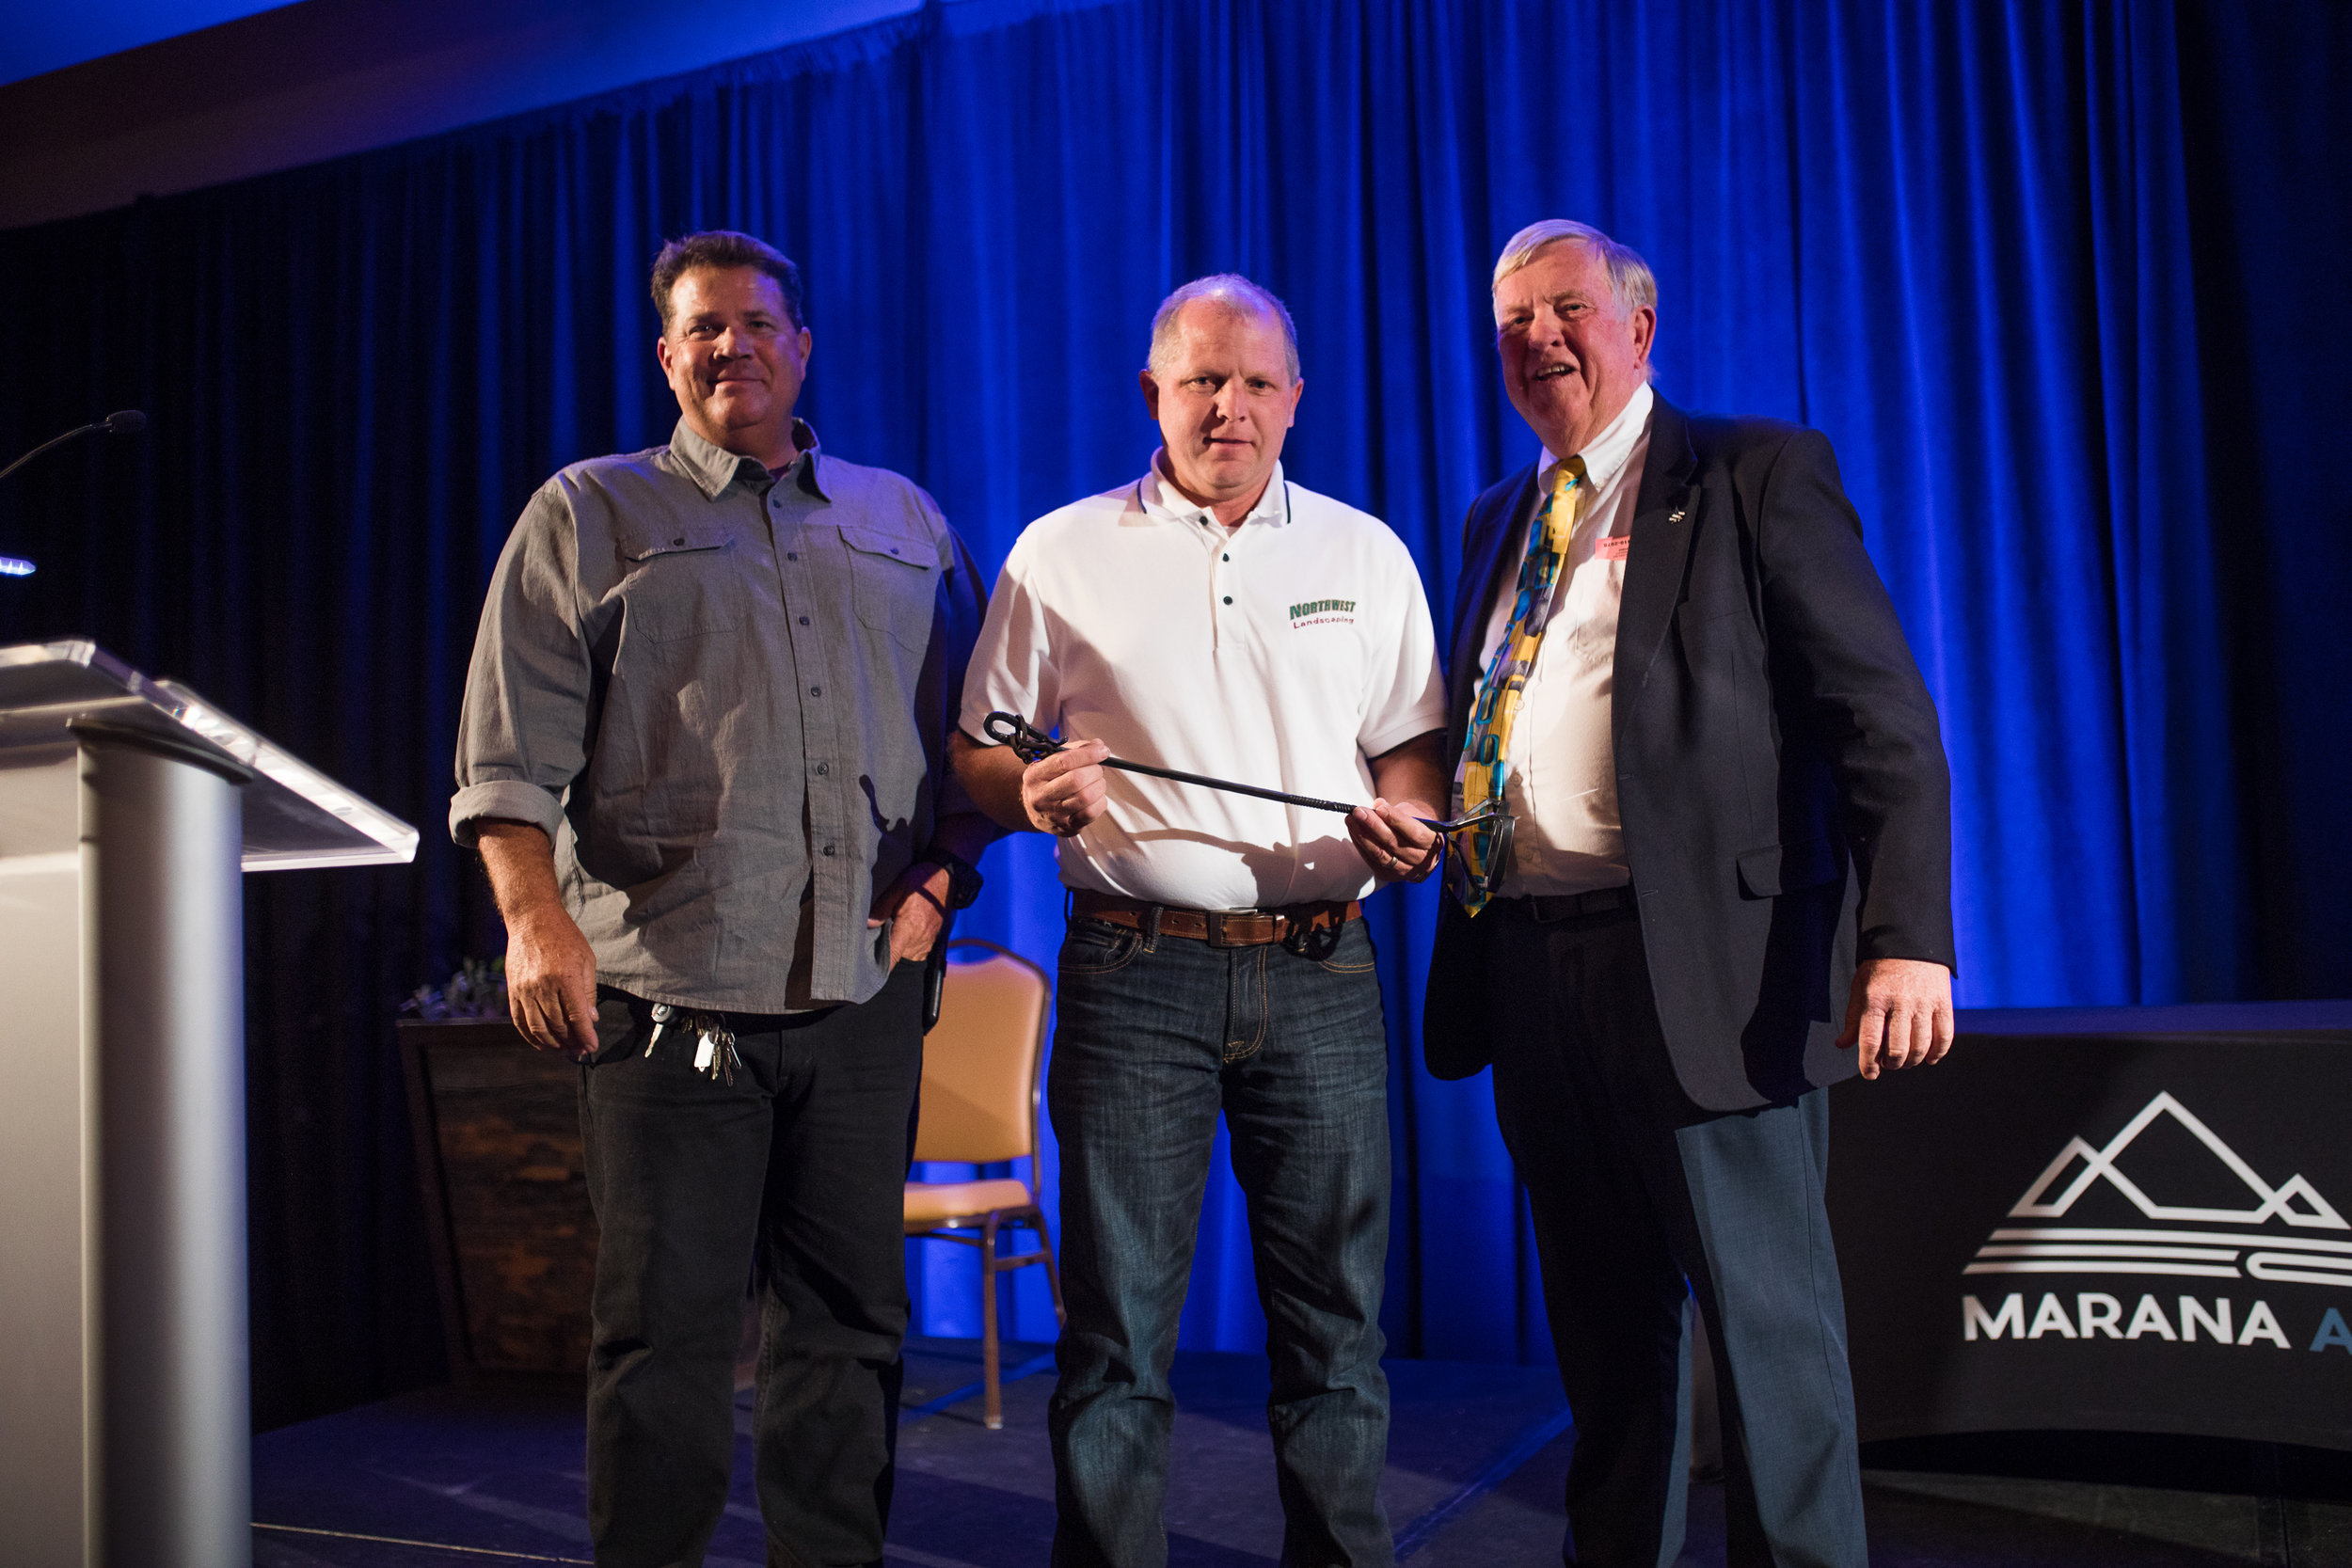  Branding Iron Award recipients Greg Brchan and Chris Fisher on behalf of Northwest Landscaping 